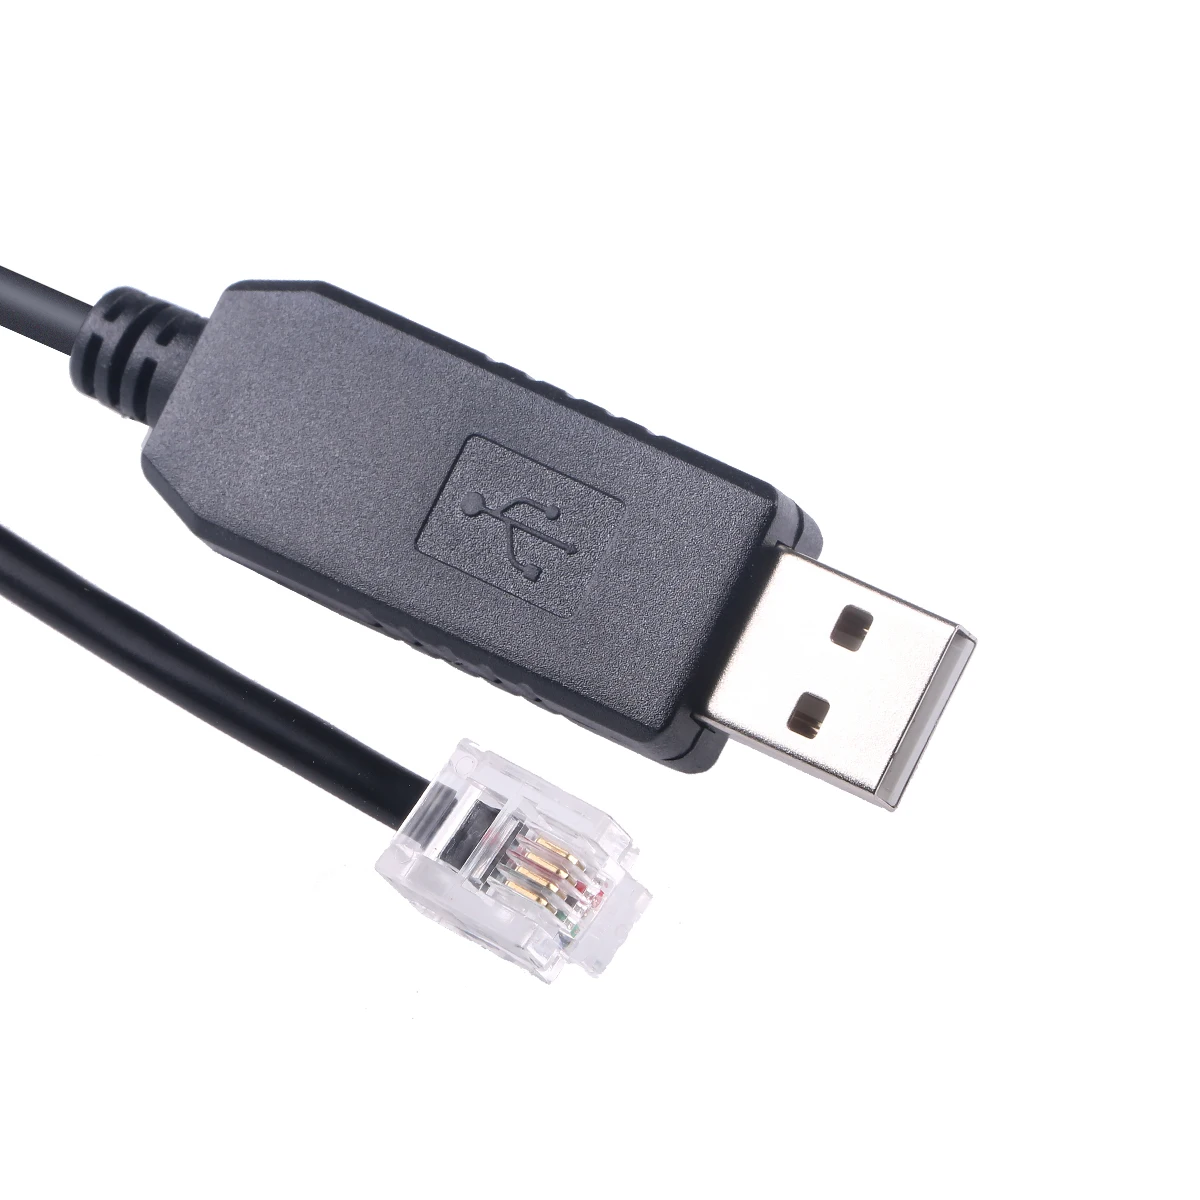 FTDI-Cable convertidor USB a RJ11 6P4C, Control manual para conectar RS232, serie...